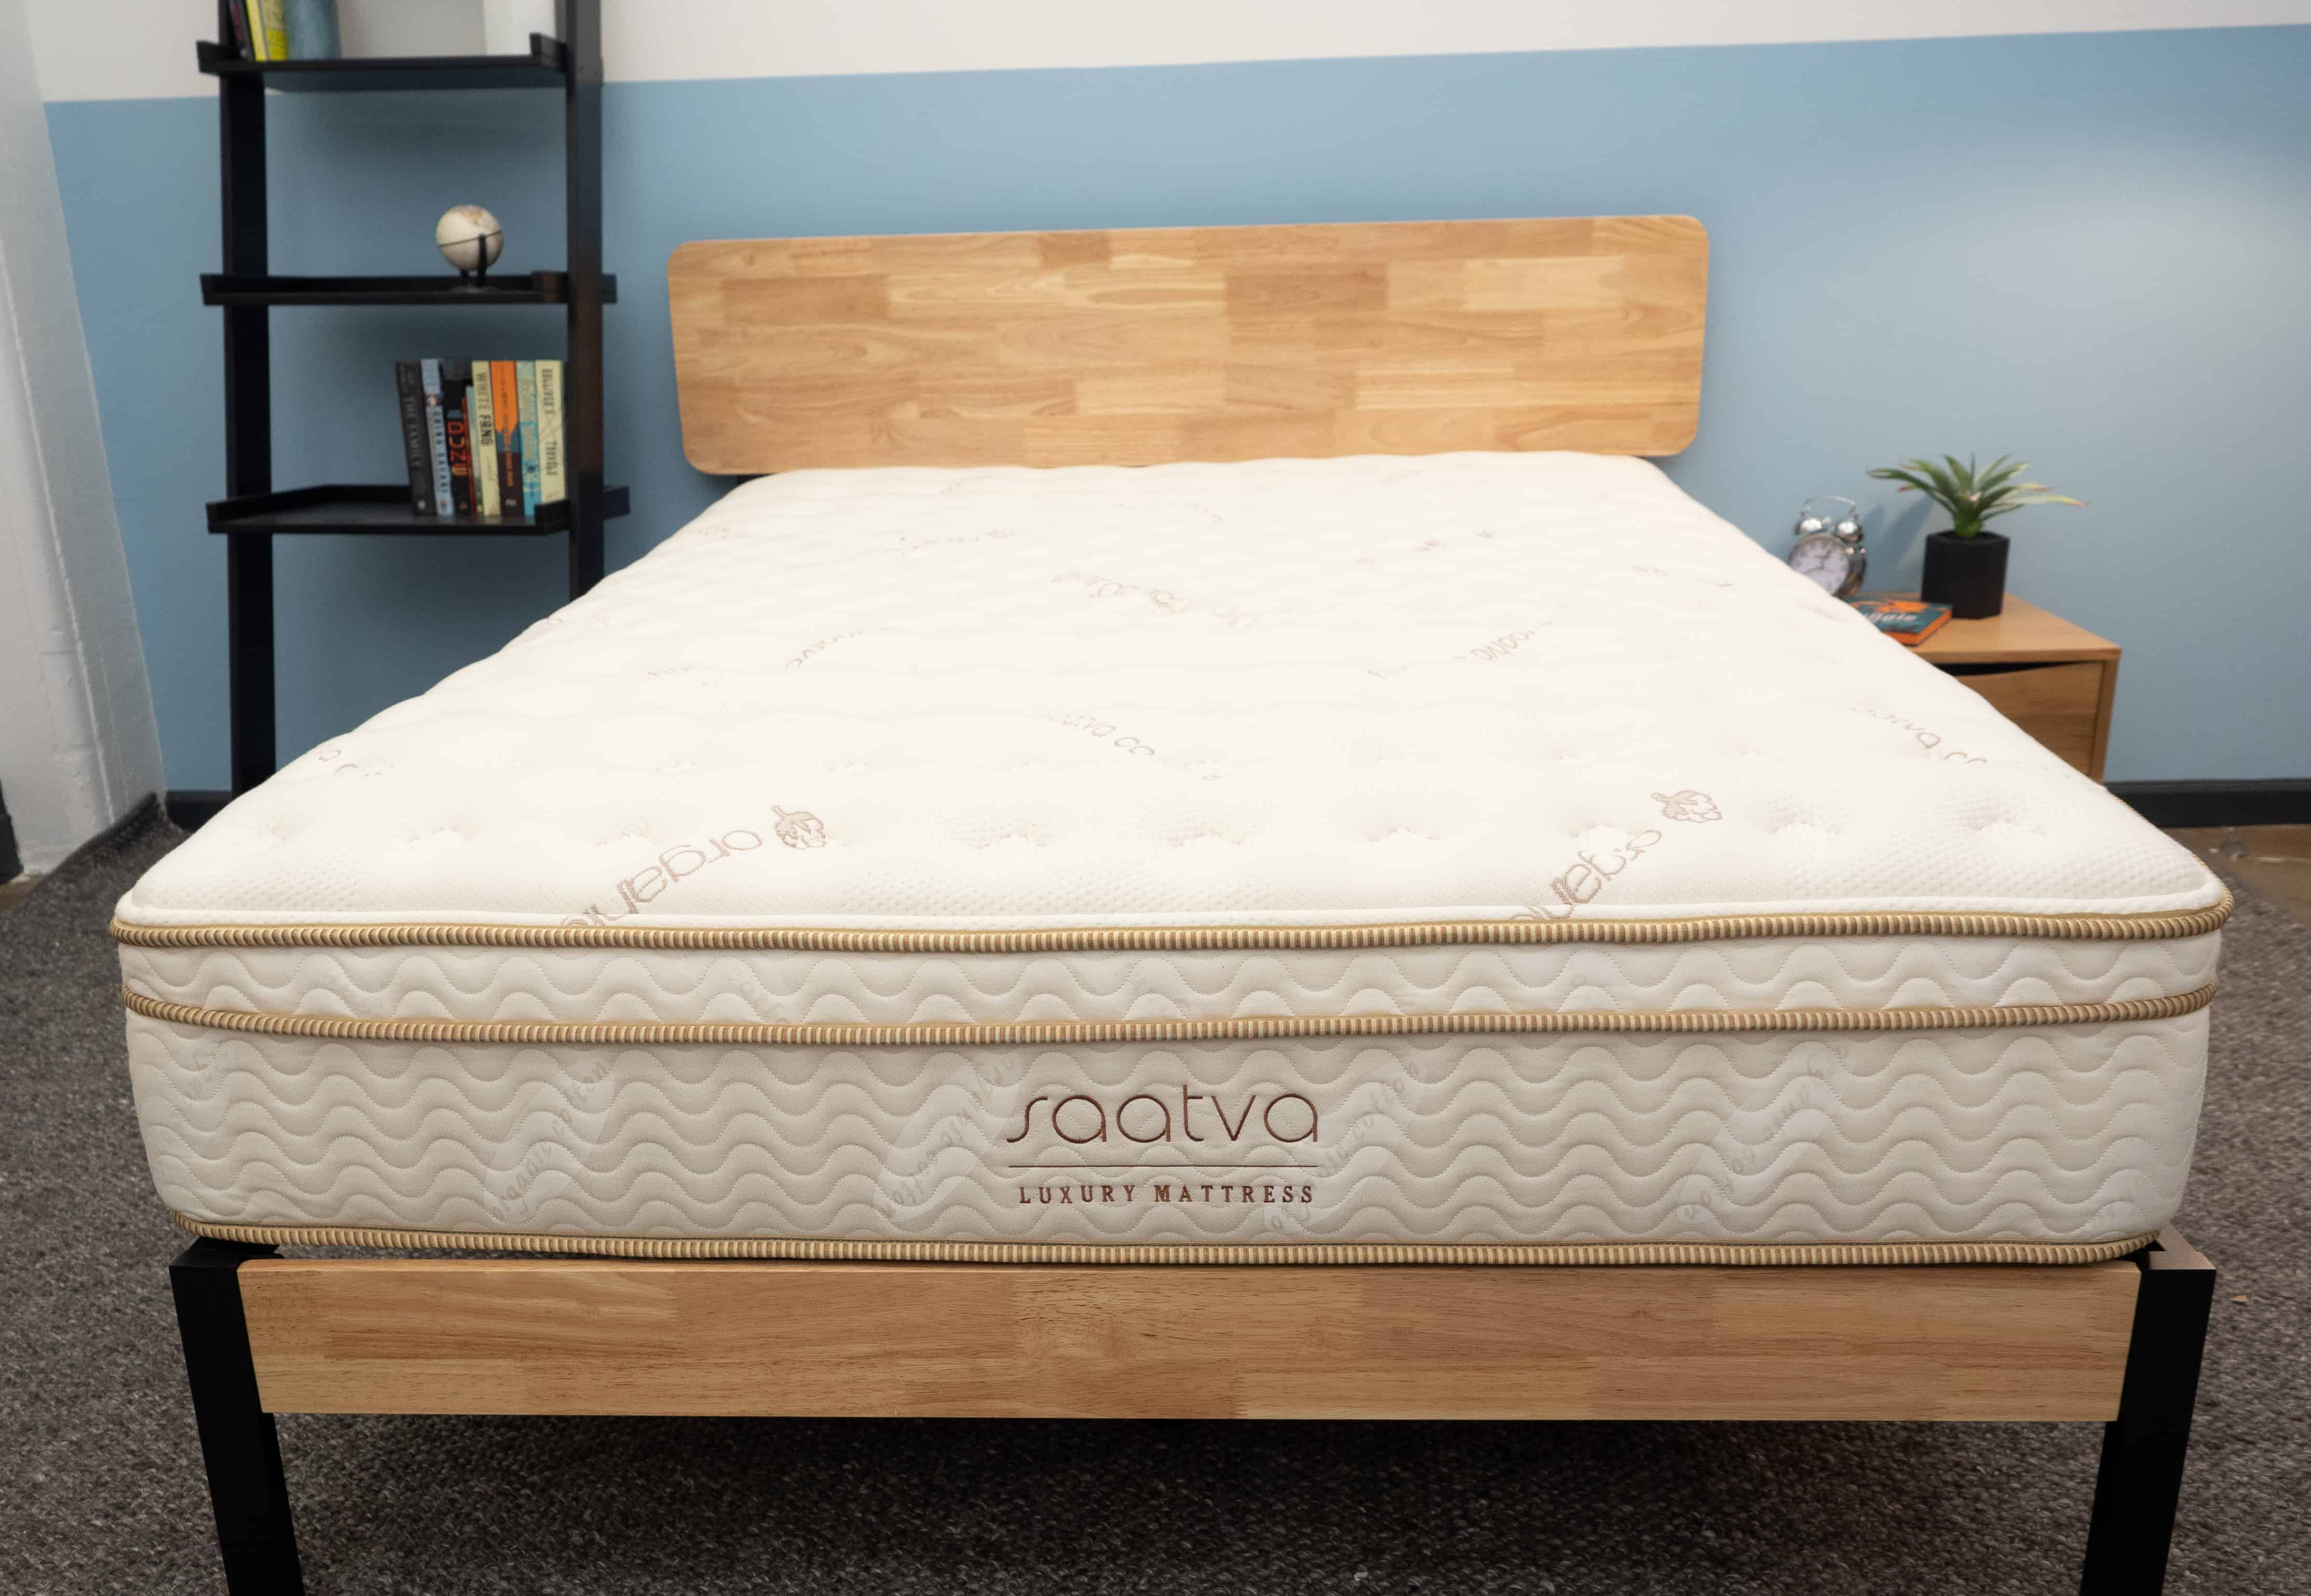 saatva mattress 8 day bed